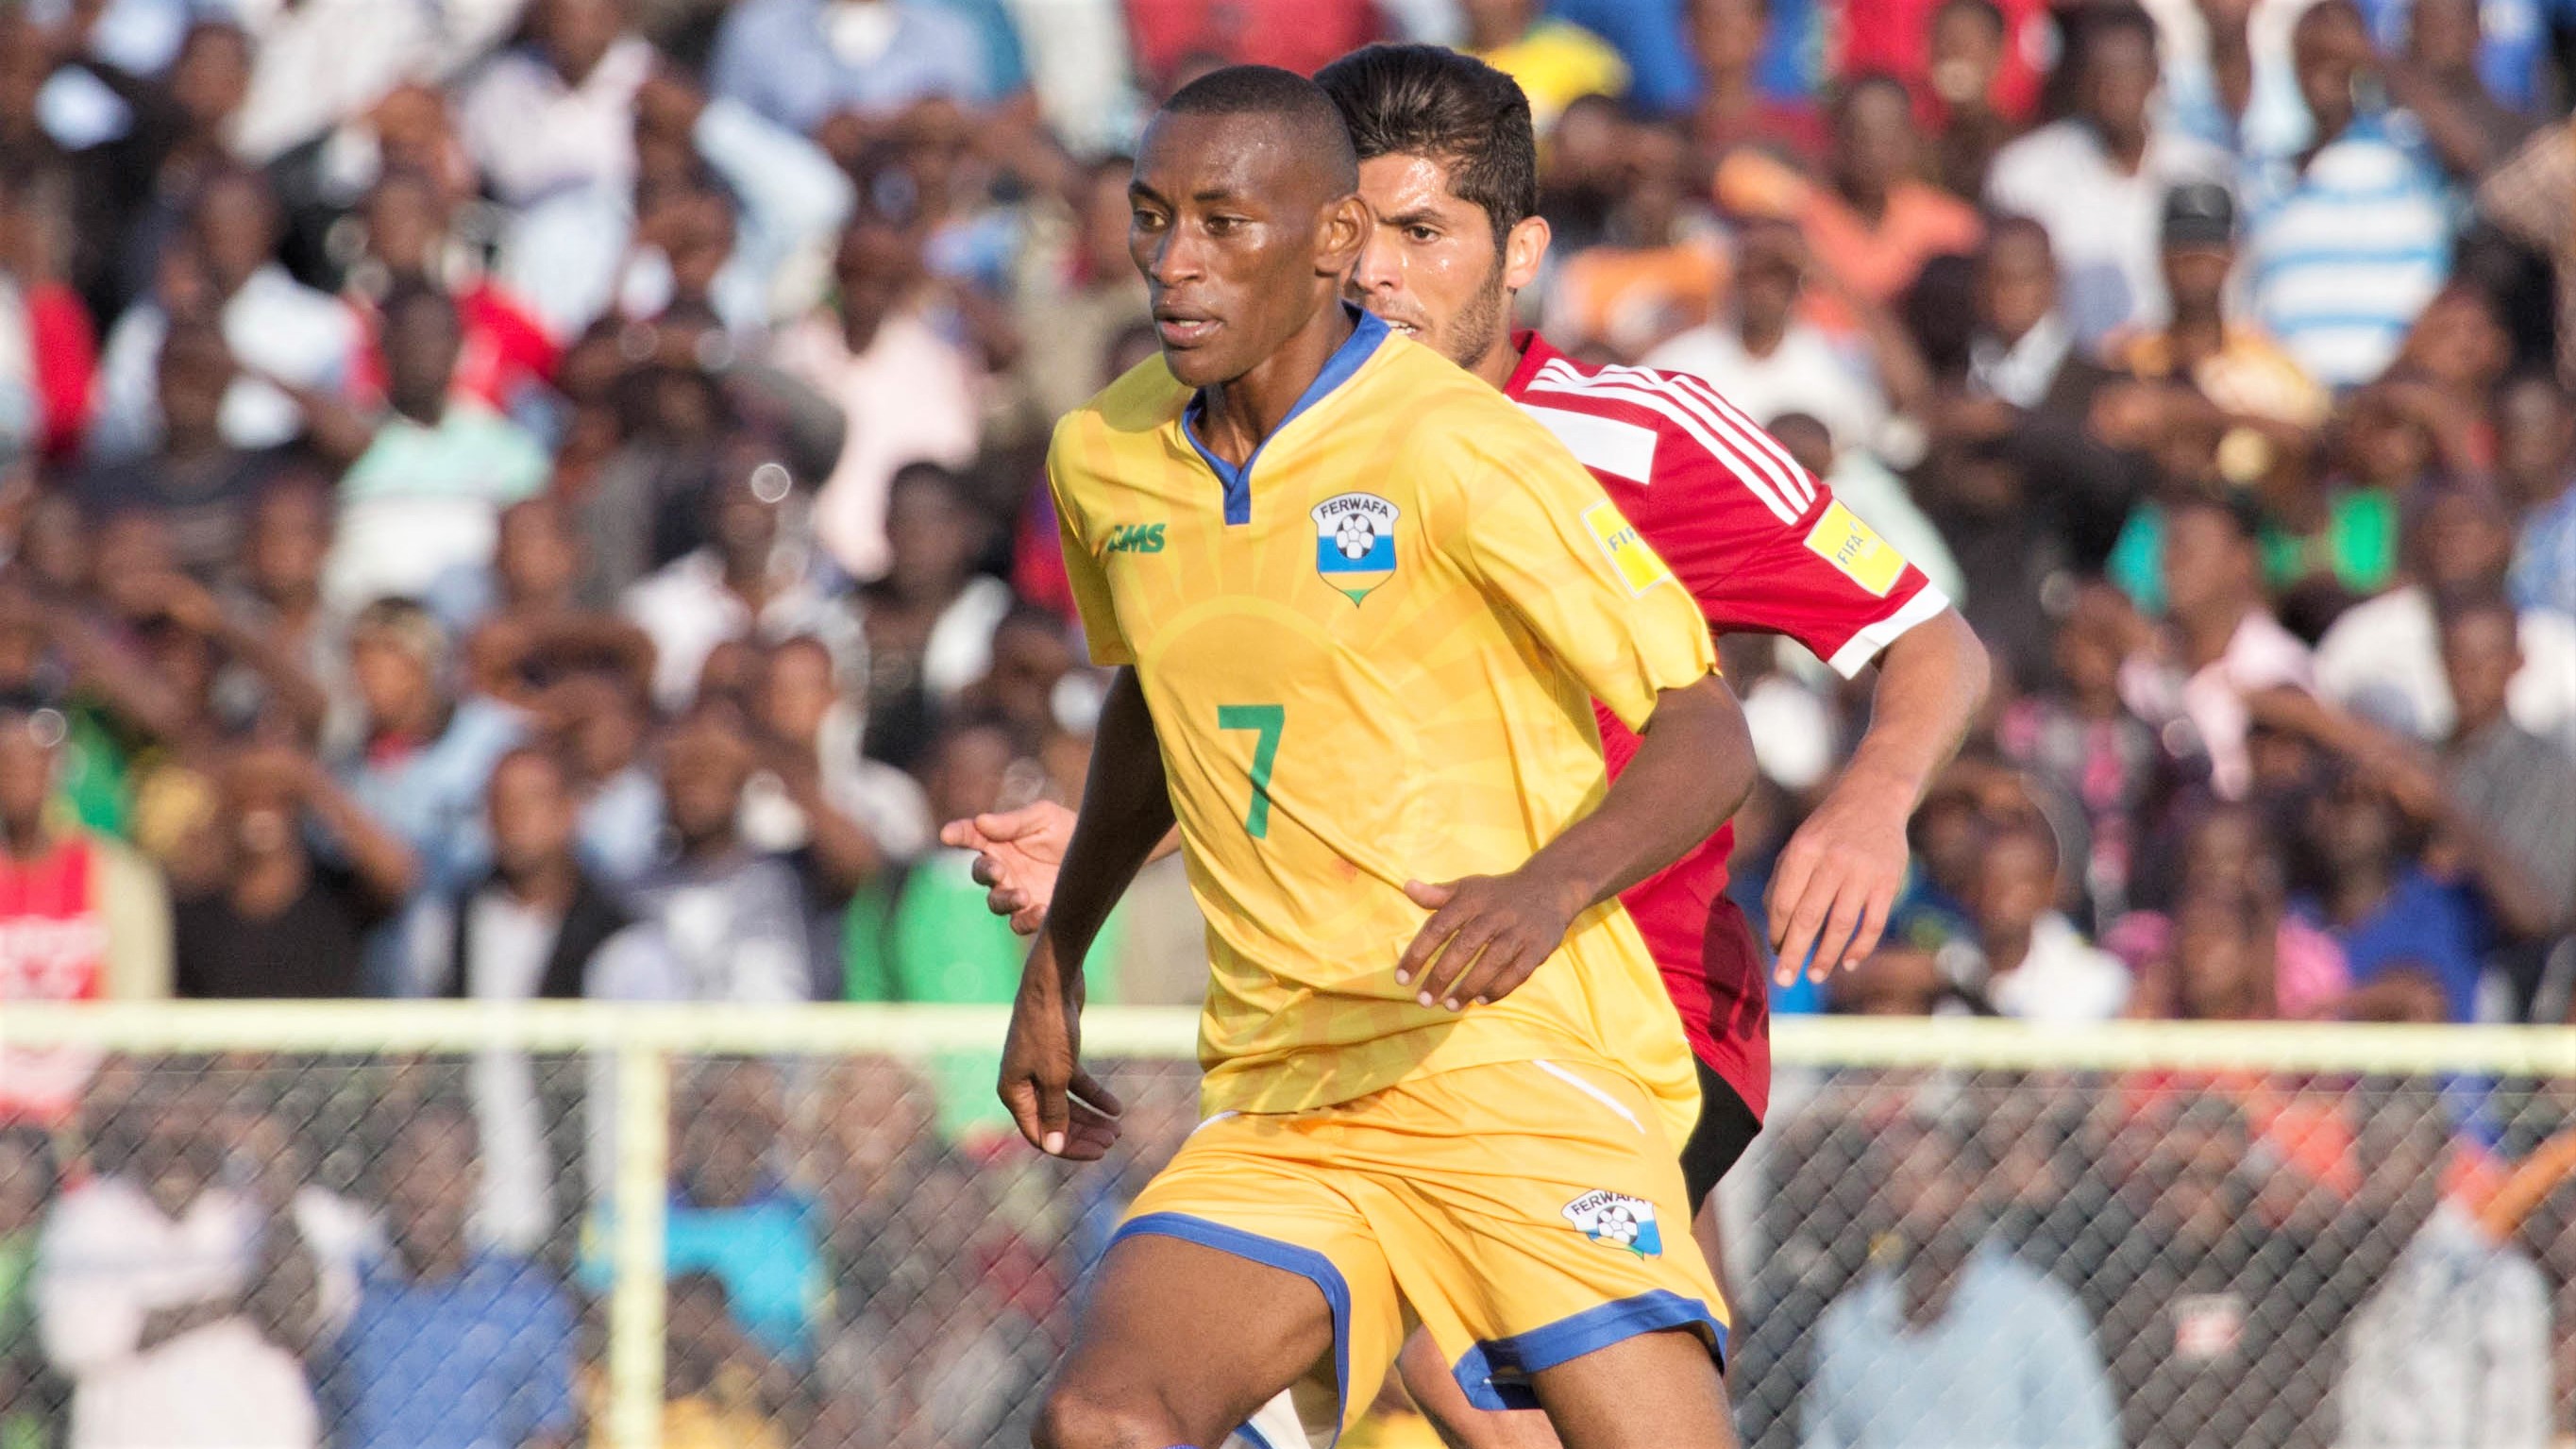 Jean Baptiste Mugiraneza made his international debut for Rwanda during the 2006 Cecafa Senior Challenge Cup tournament held in Kigali. 